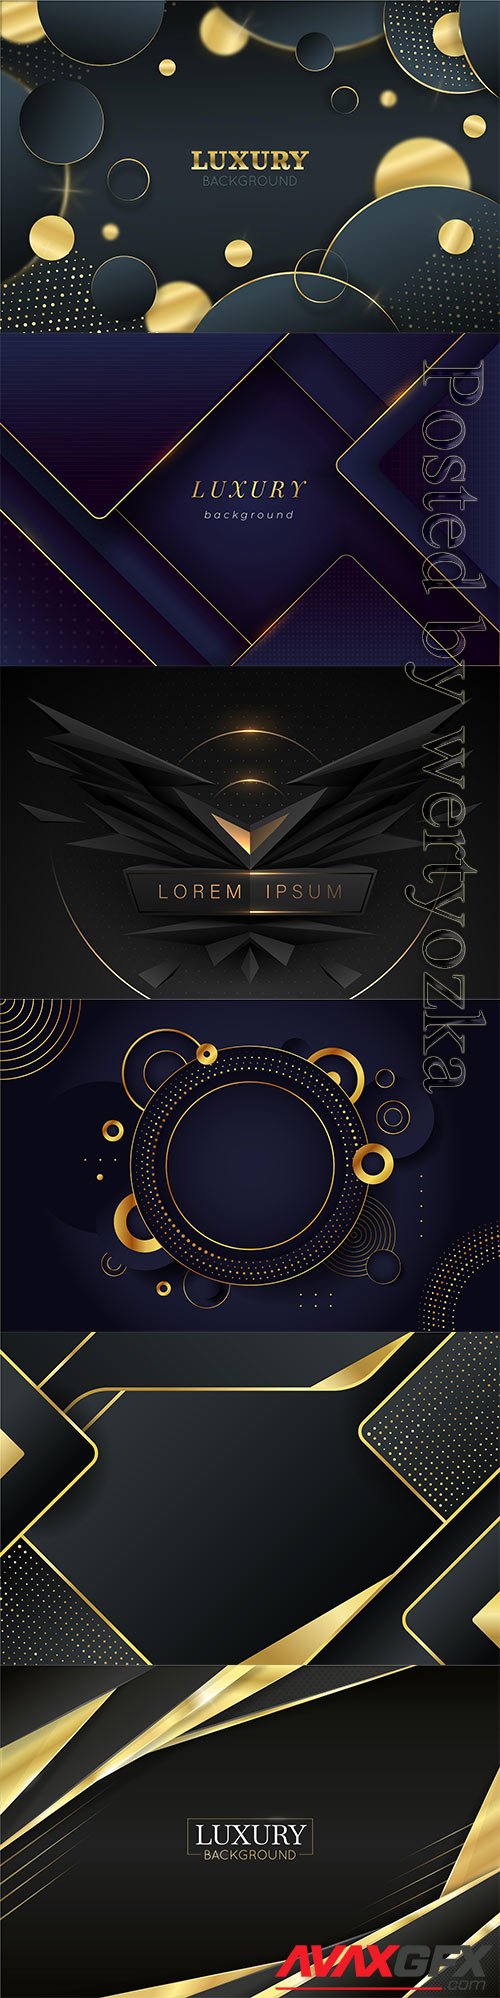 Dark gold and black luxury vector background